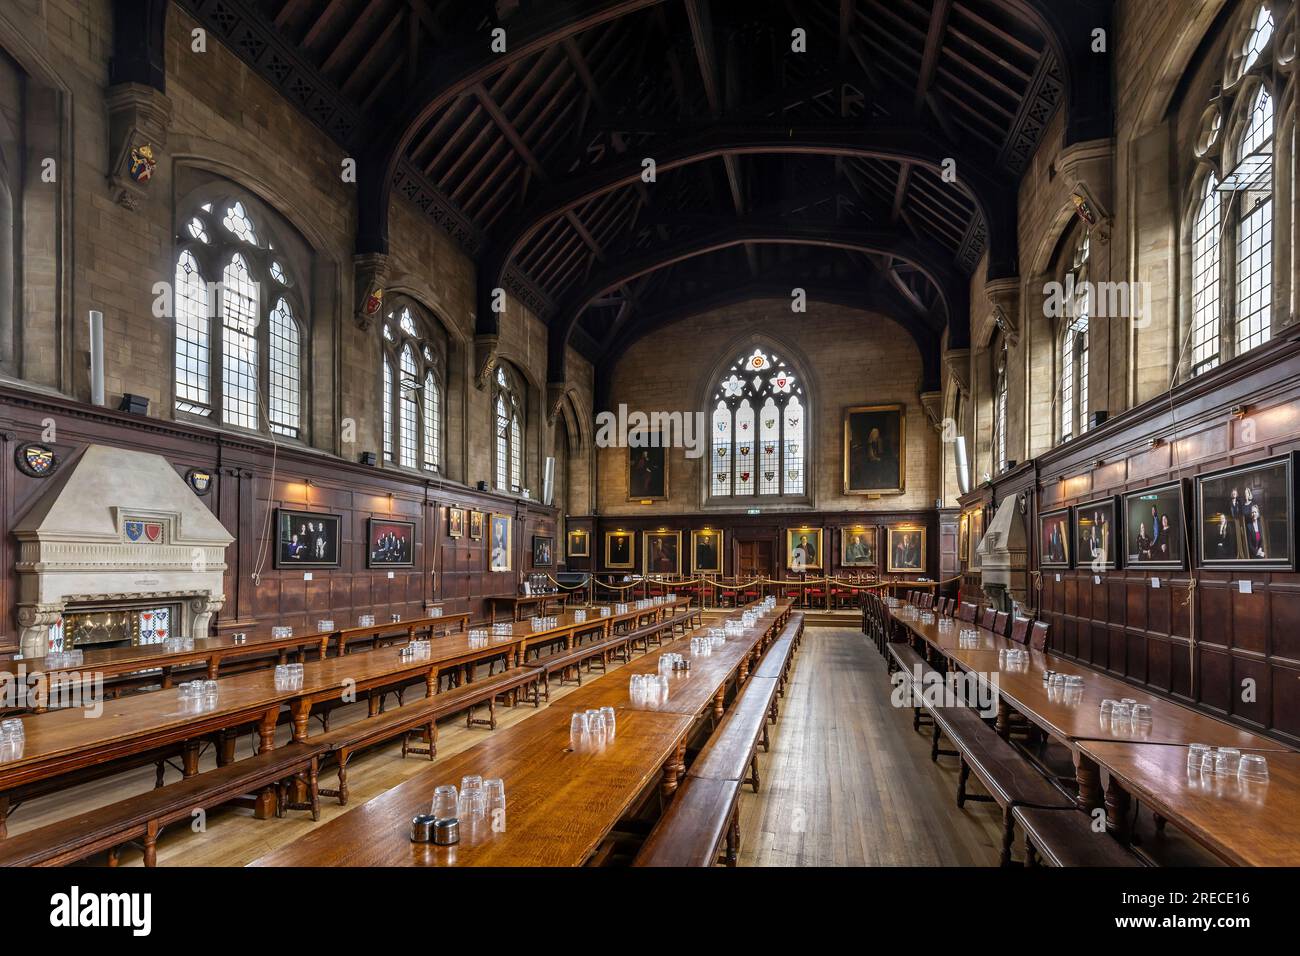 Dining Hall interior, Balliol College, Oxford University. Stock Photo